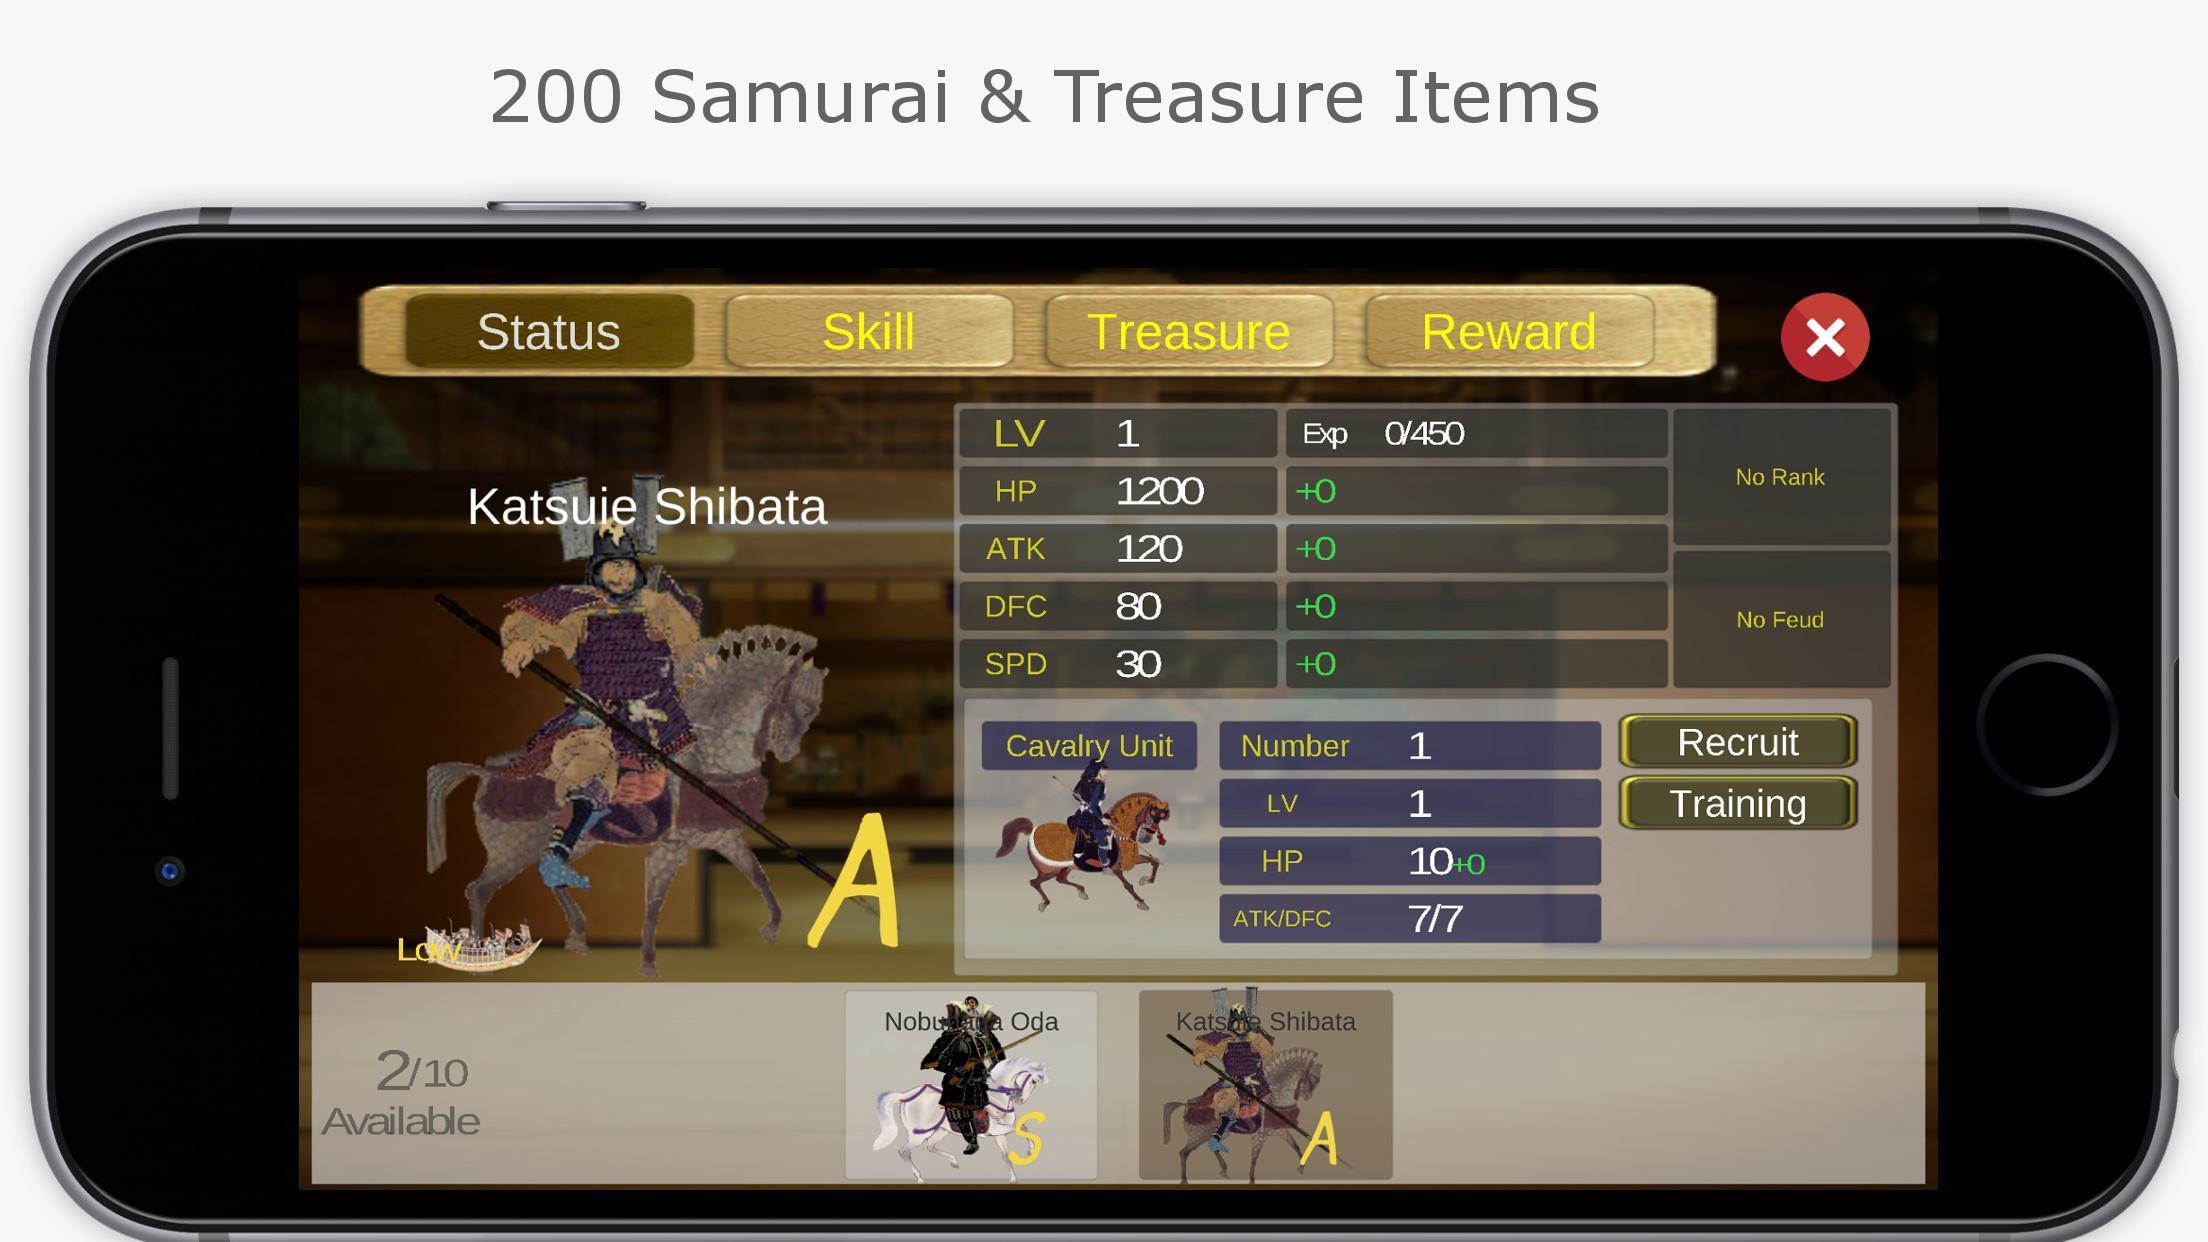 Screenshot of The Samurai Wars